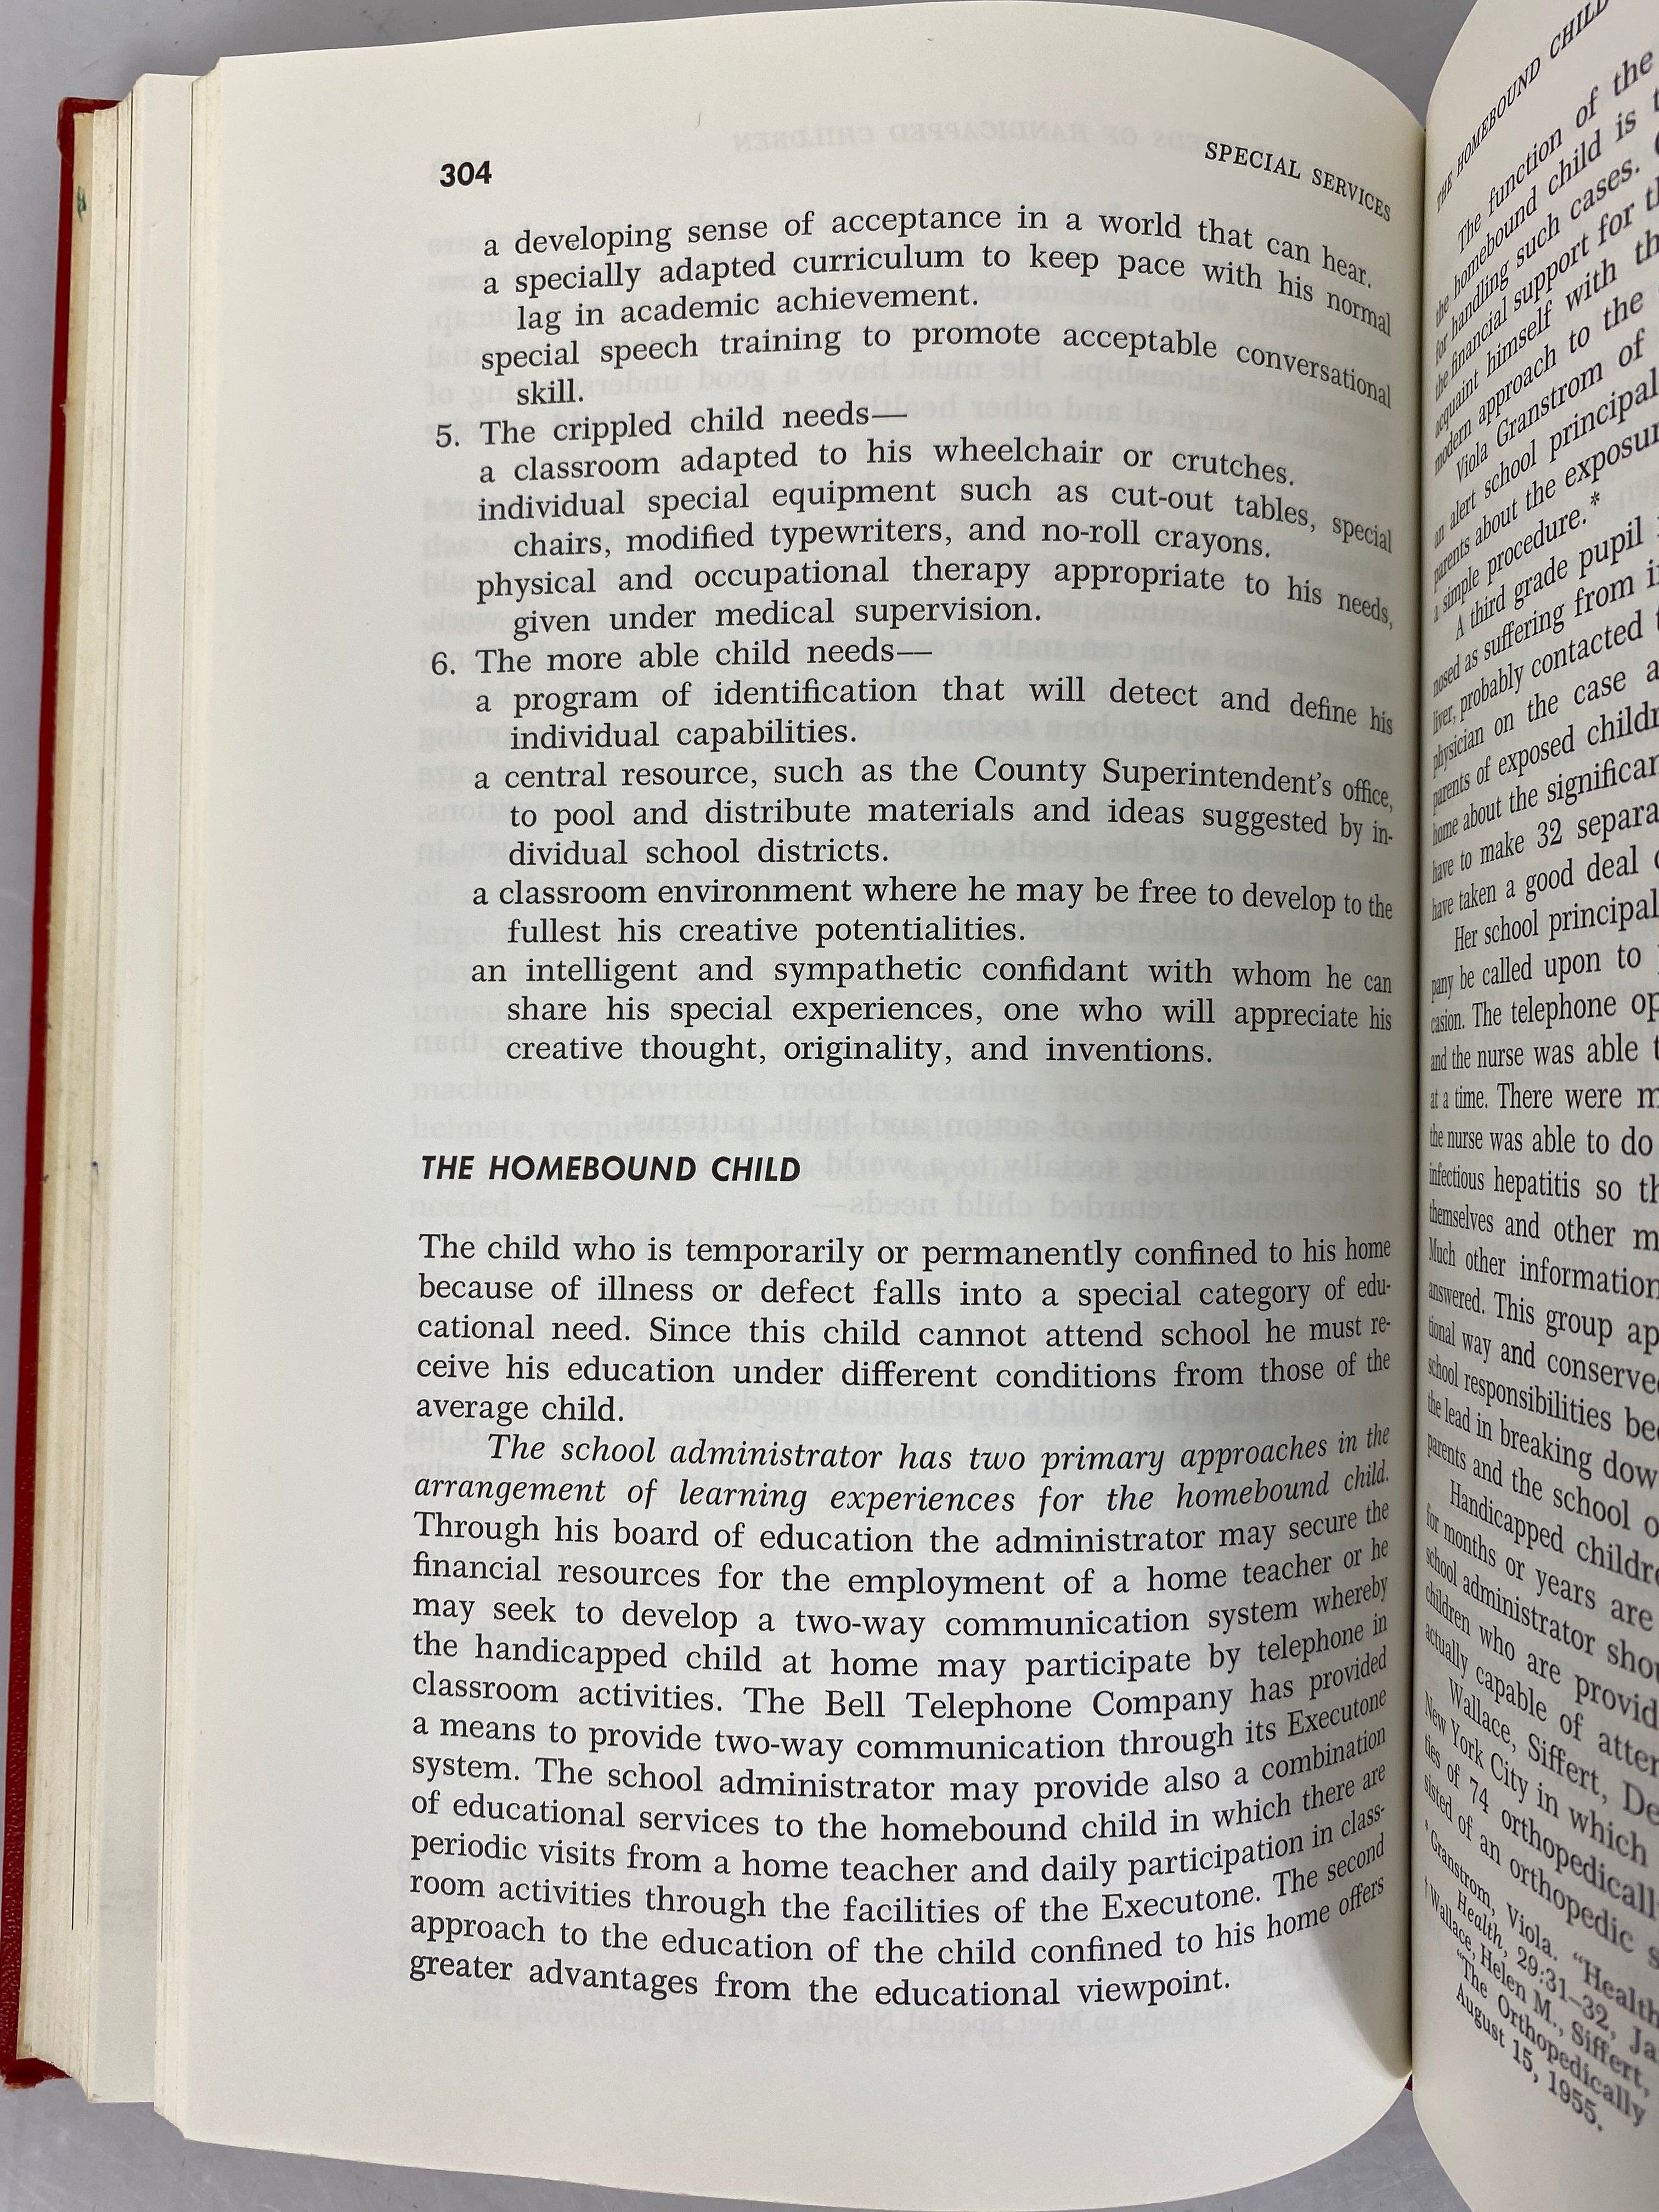 School Health Administration by Oliver E. Byrd 1964 HC